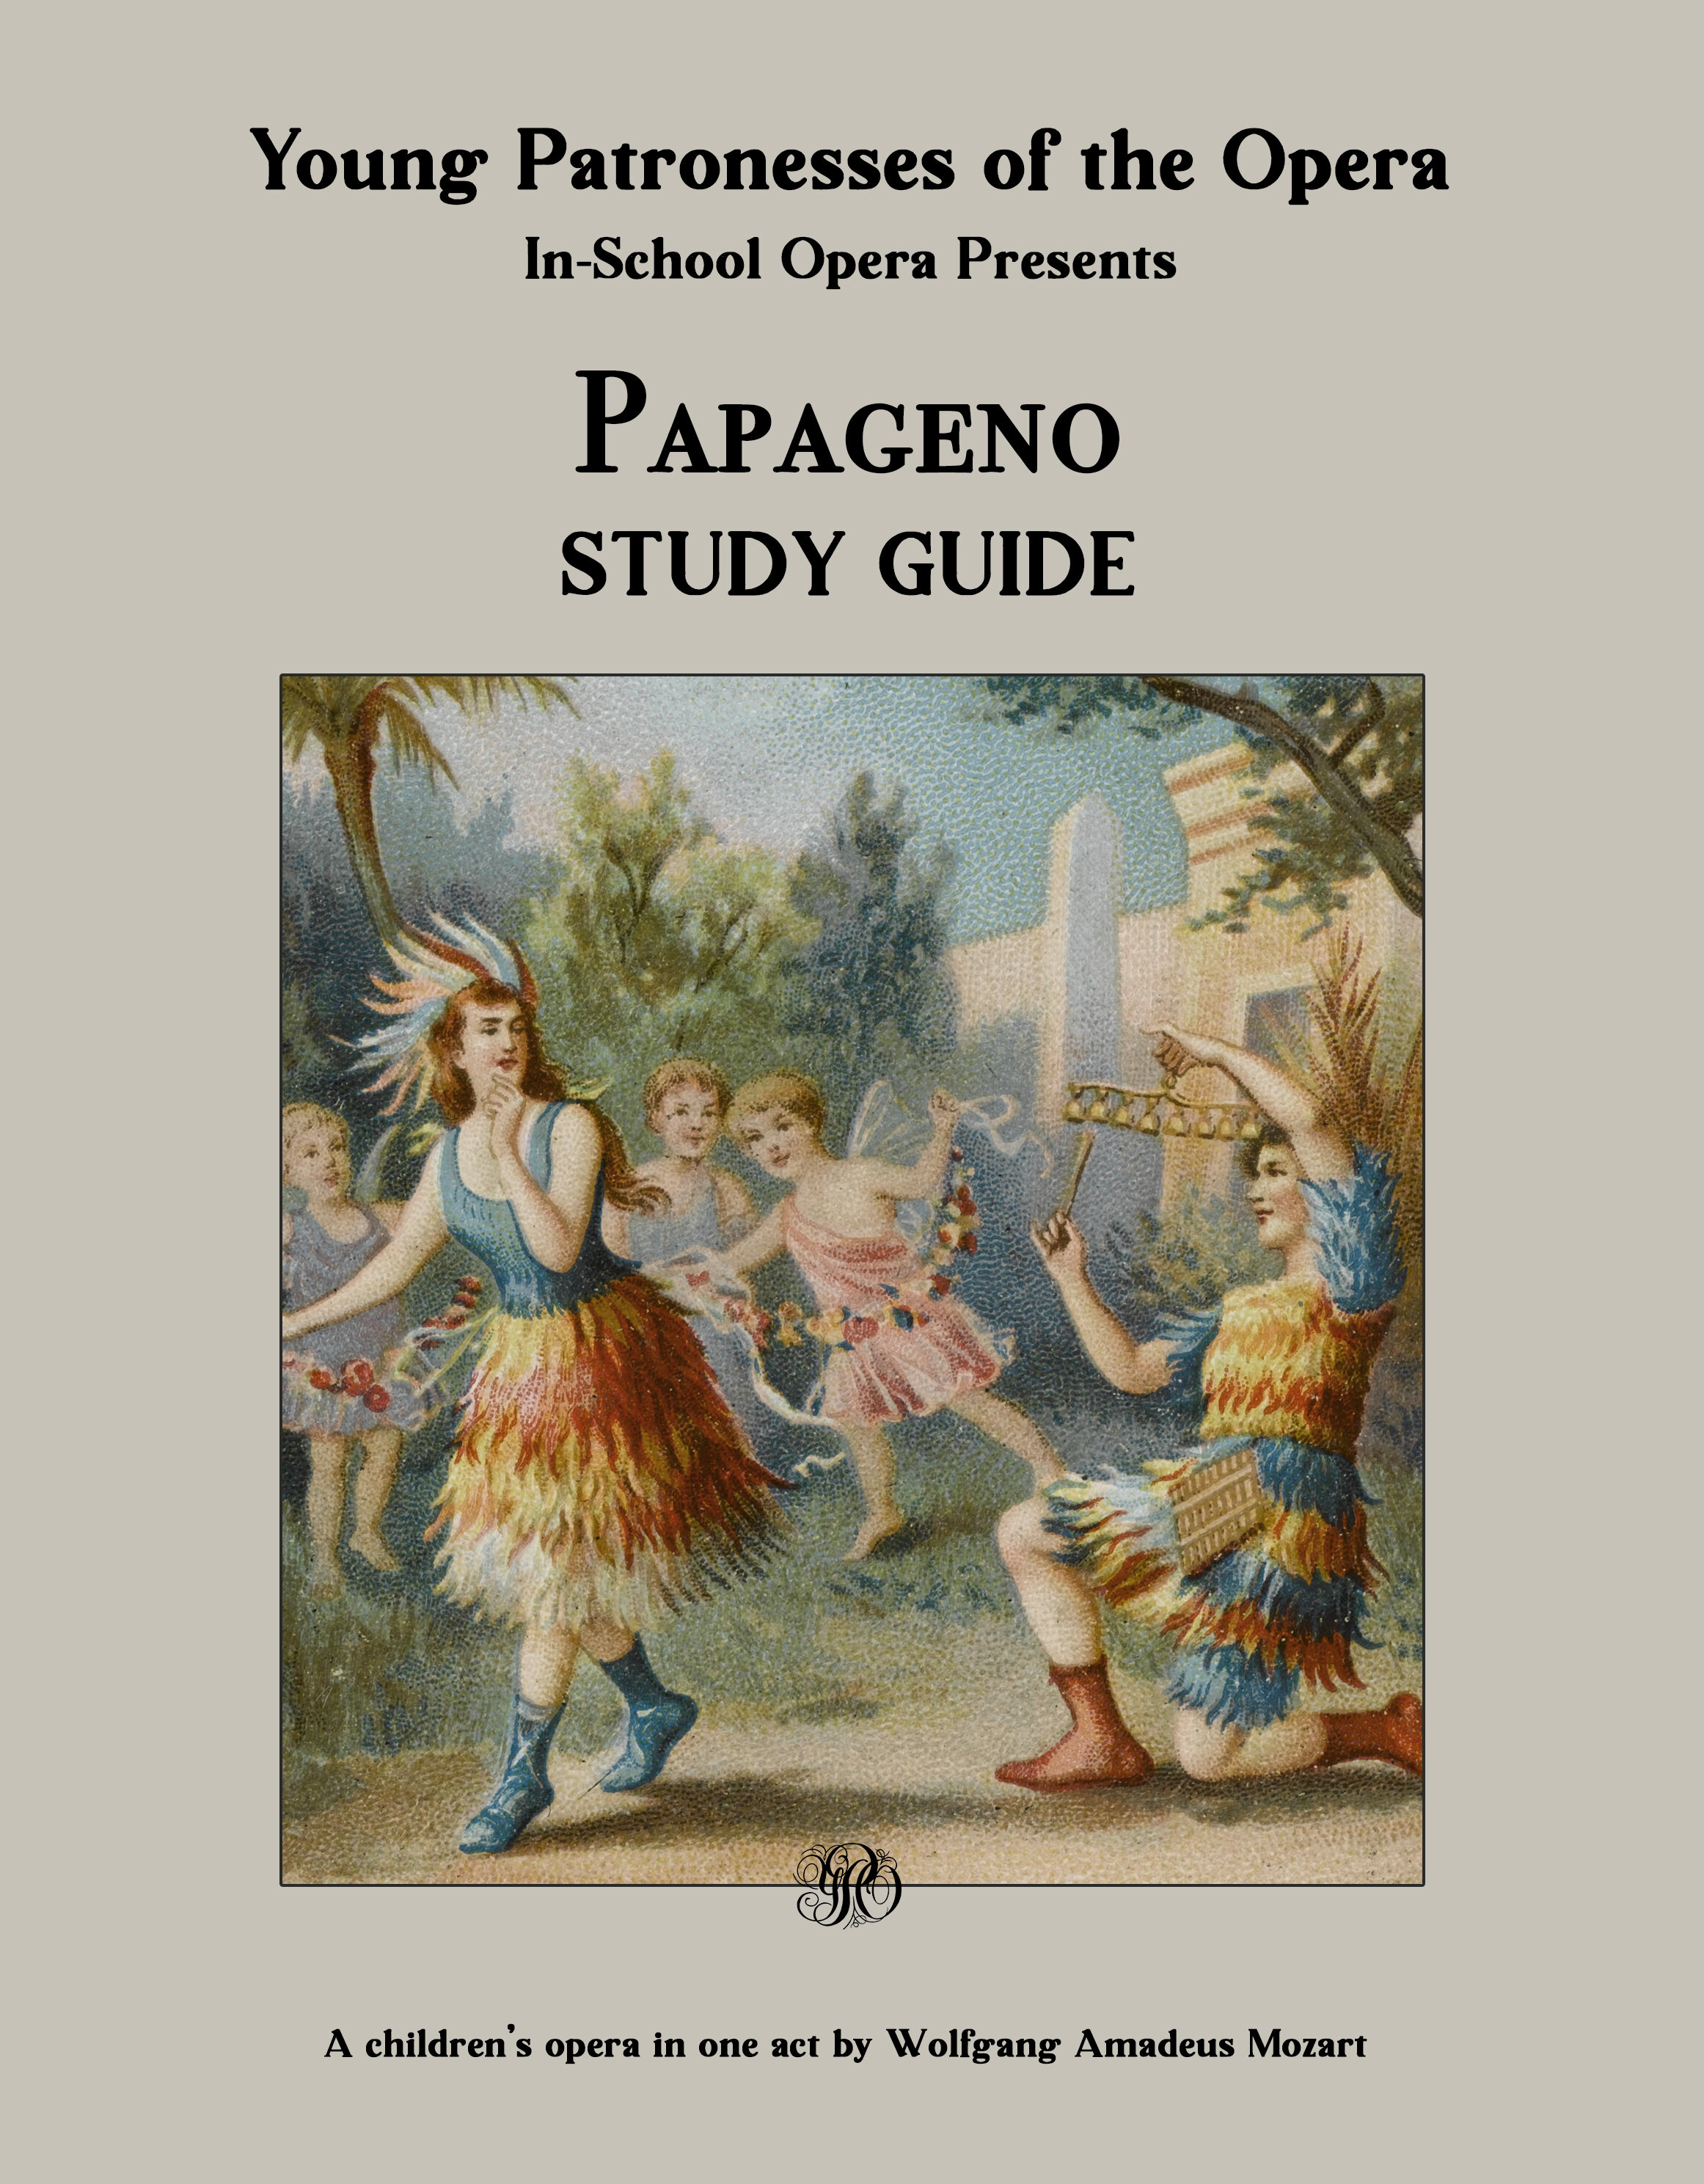 Papageno Study Guide.jpg